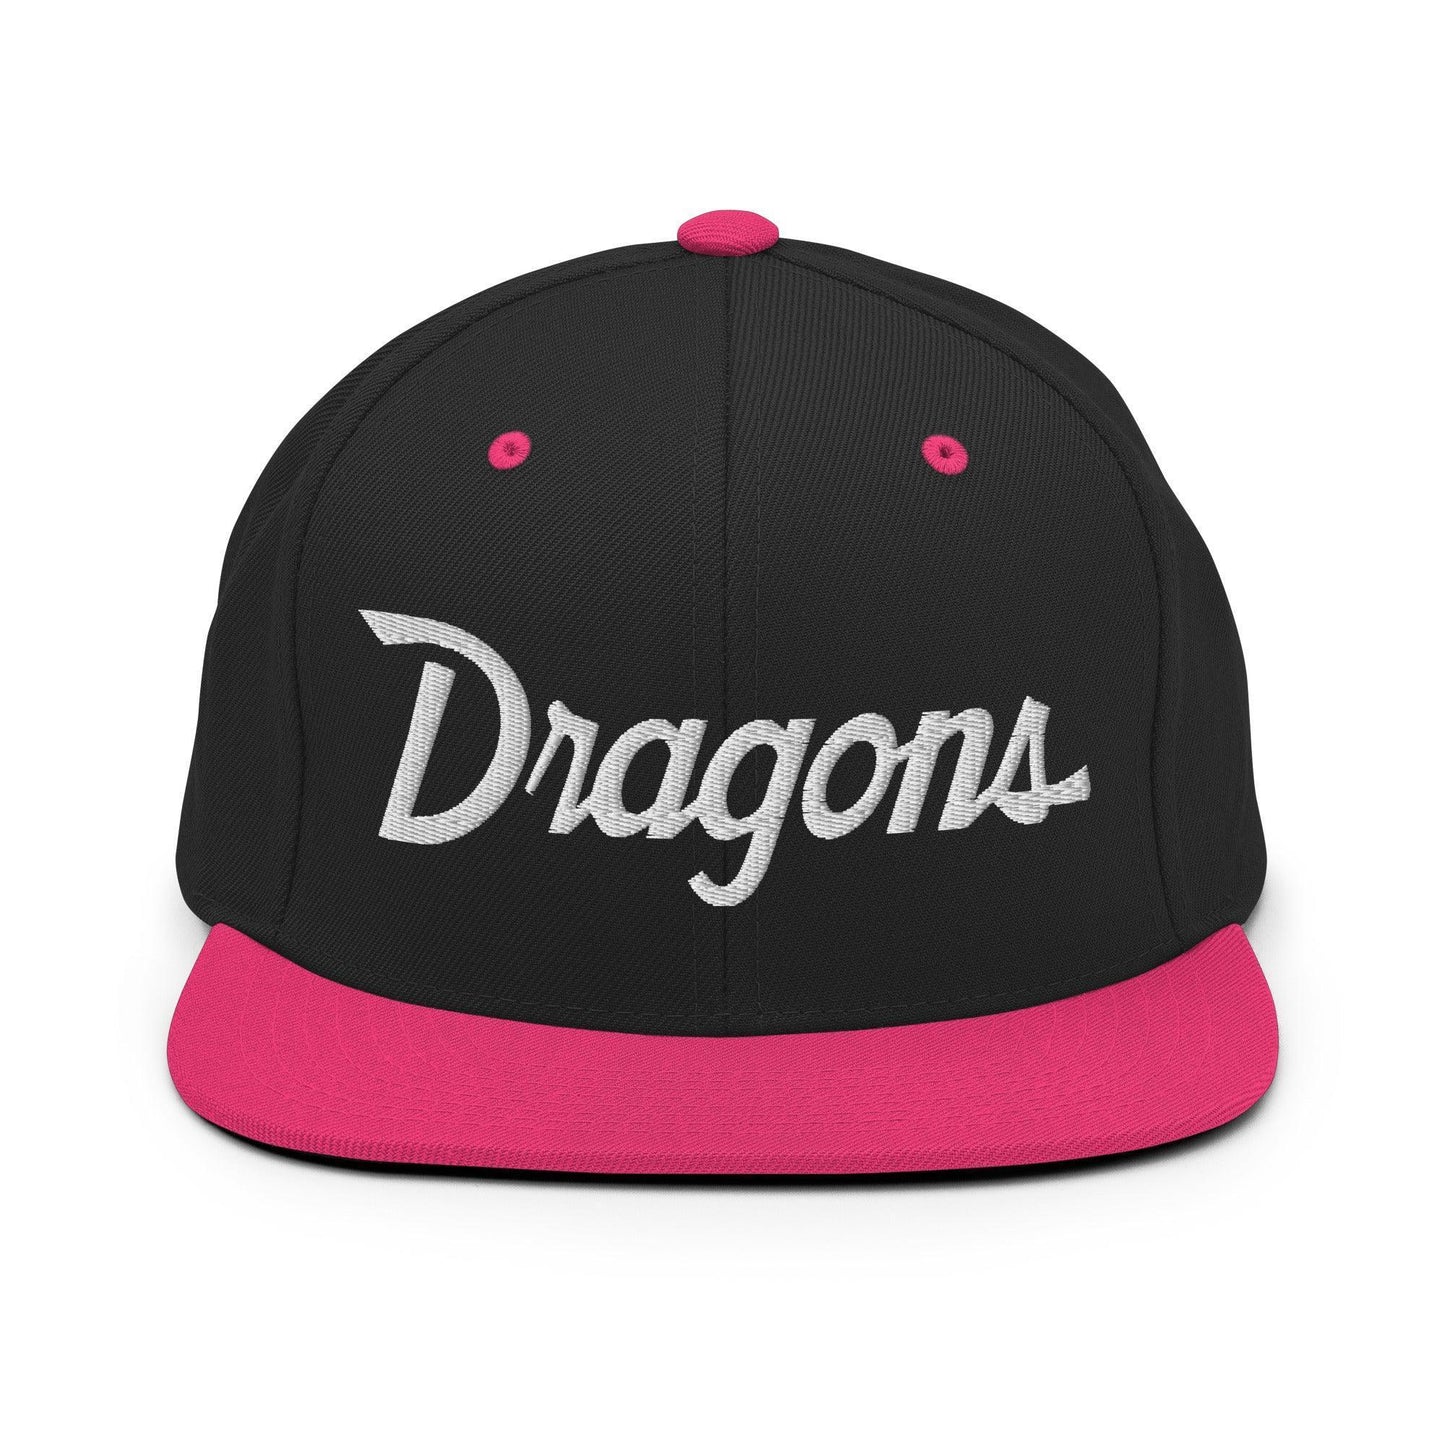 Dragons School Mascot Snapback Hat Black/ Neon Pink